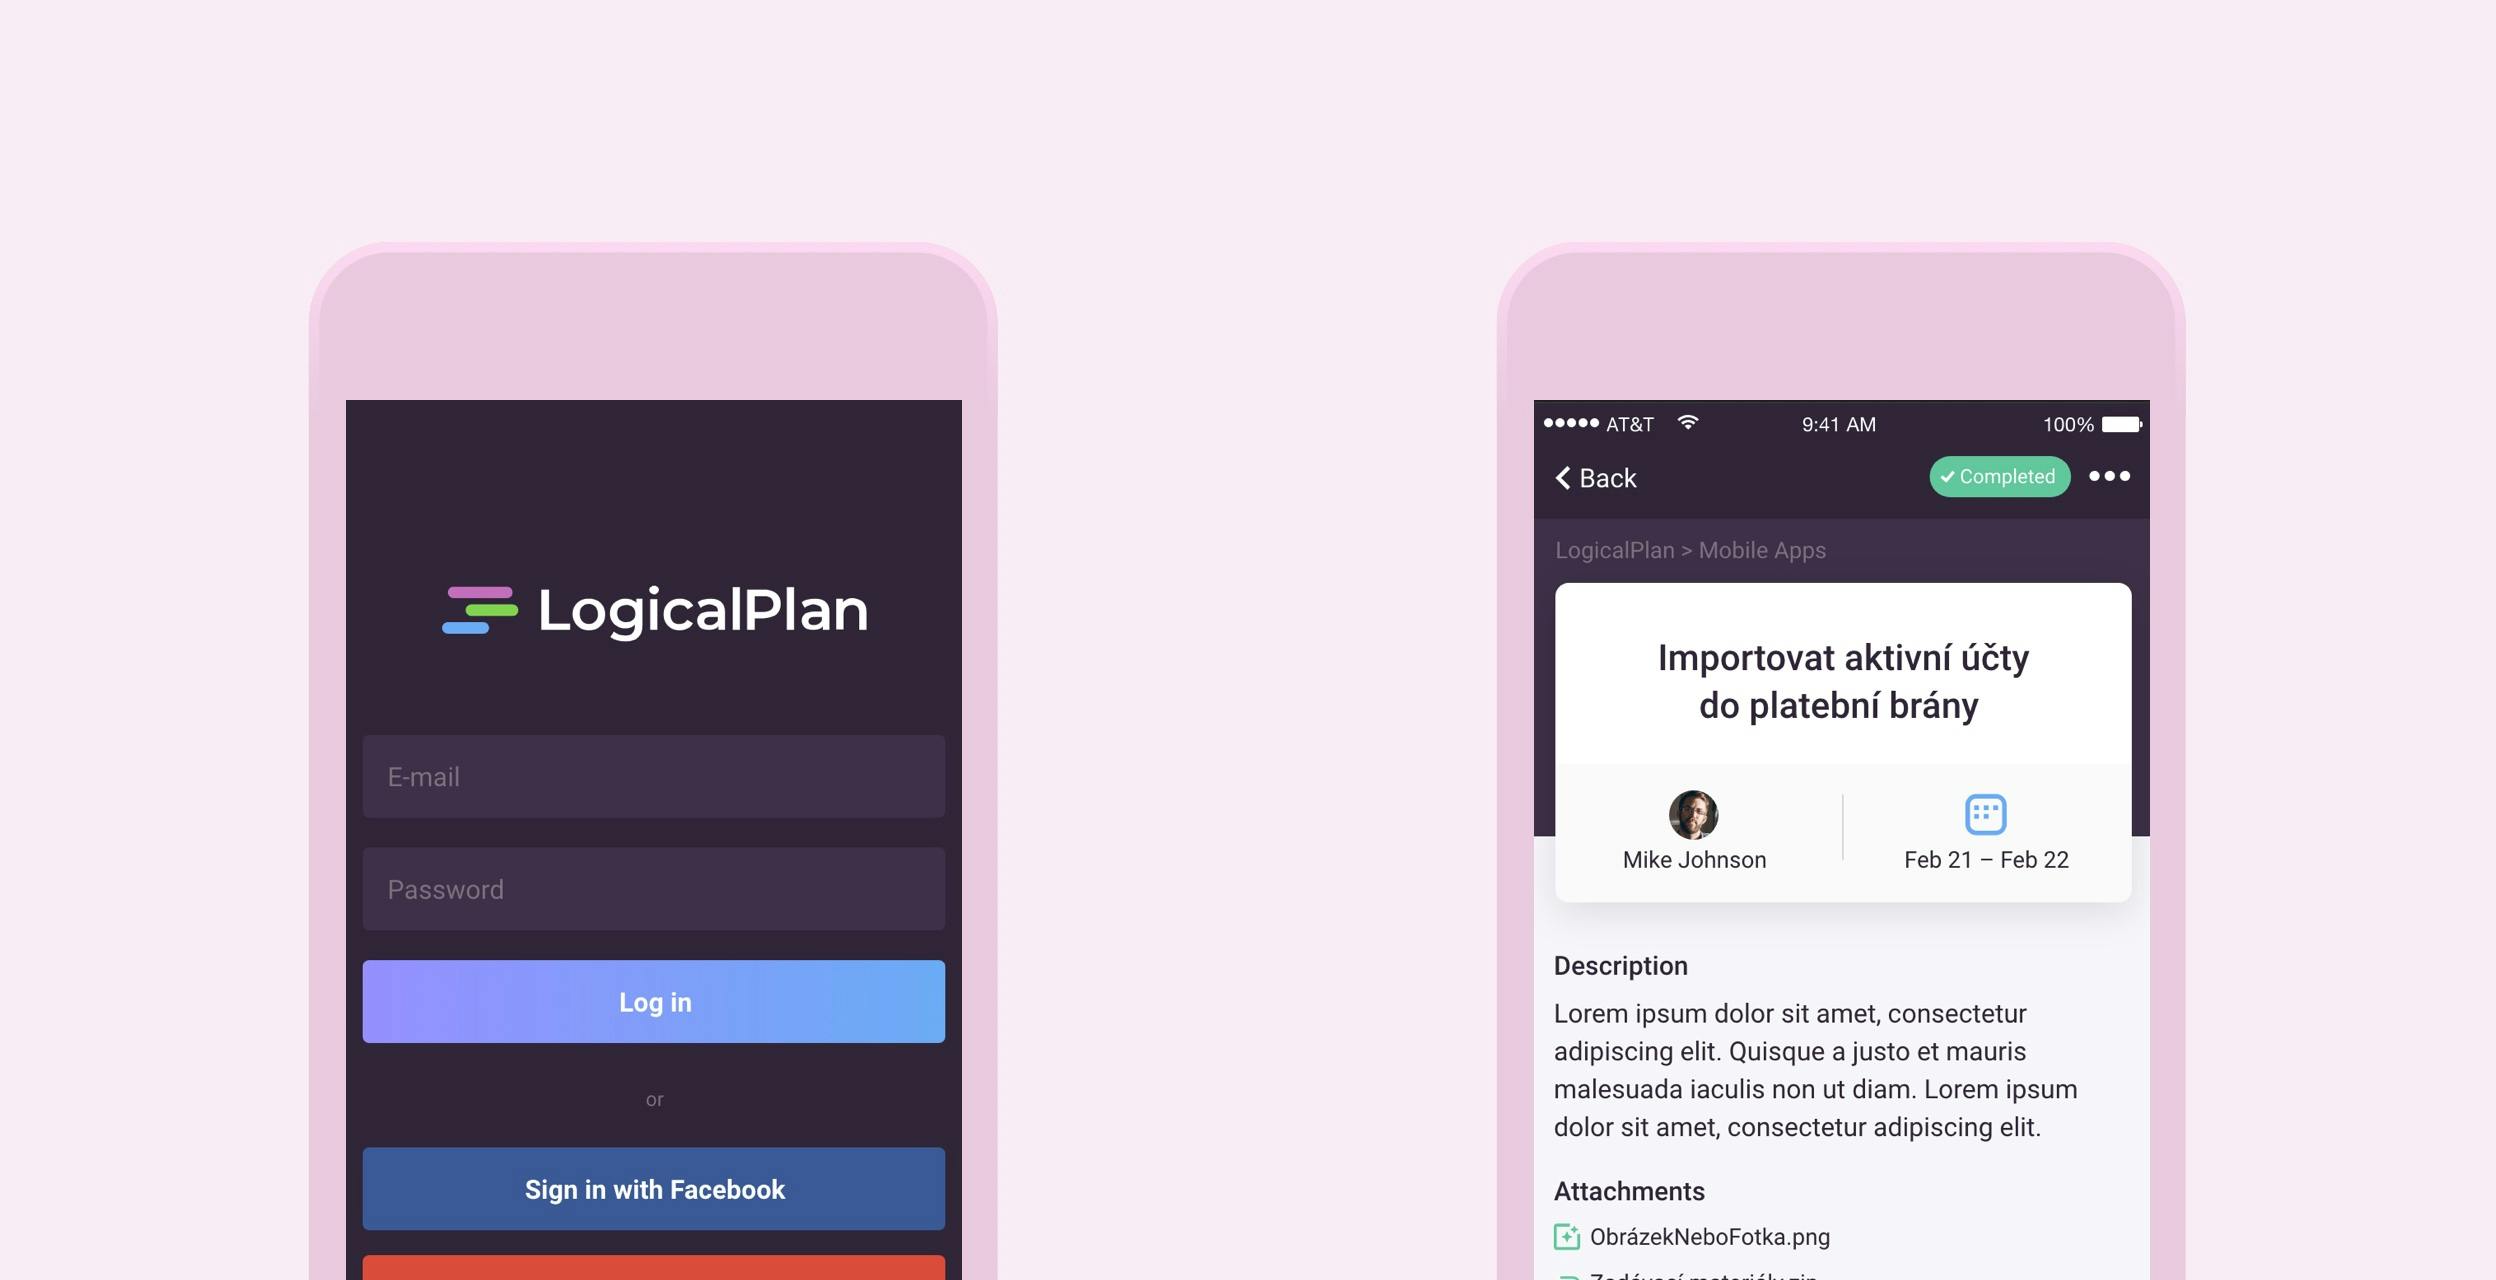 LogicalPlan mobile app screens